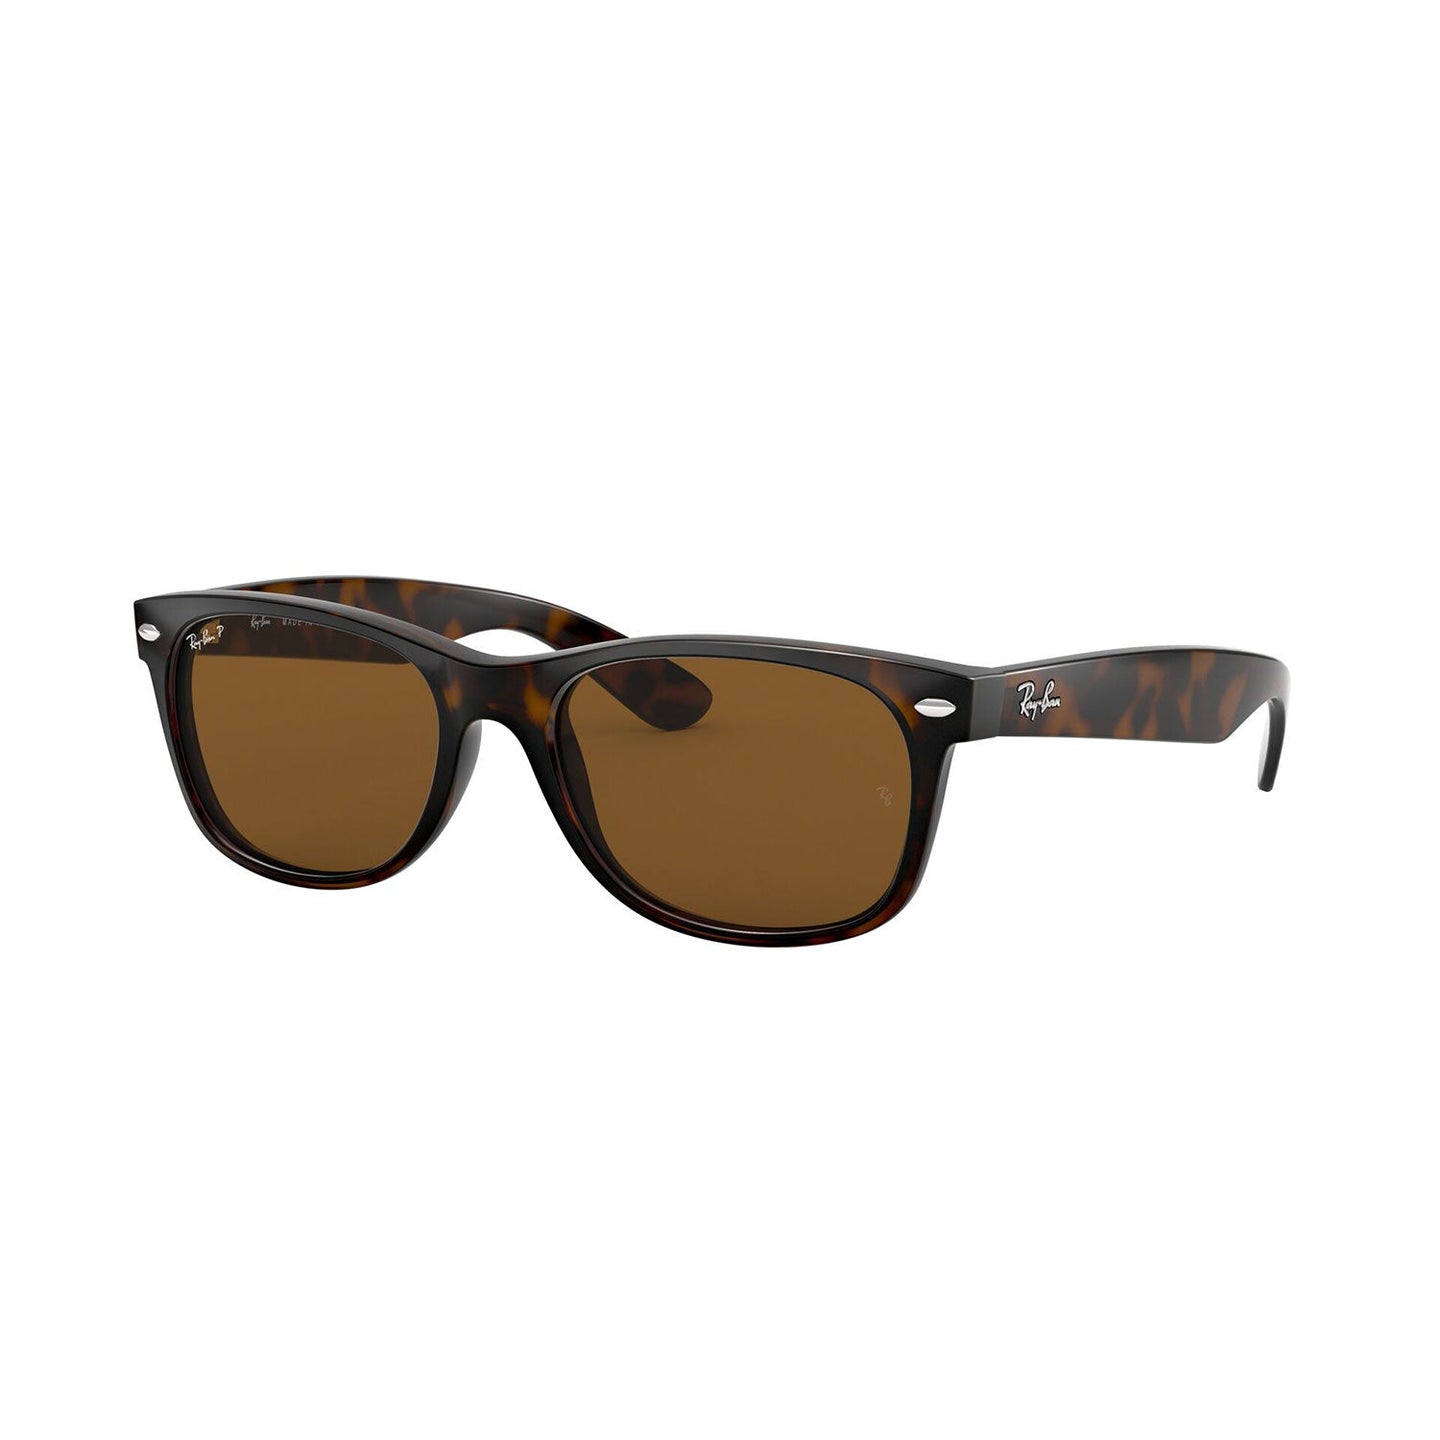 sunglasses ray ban model rb 2132 color 902/57 brown tortoise